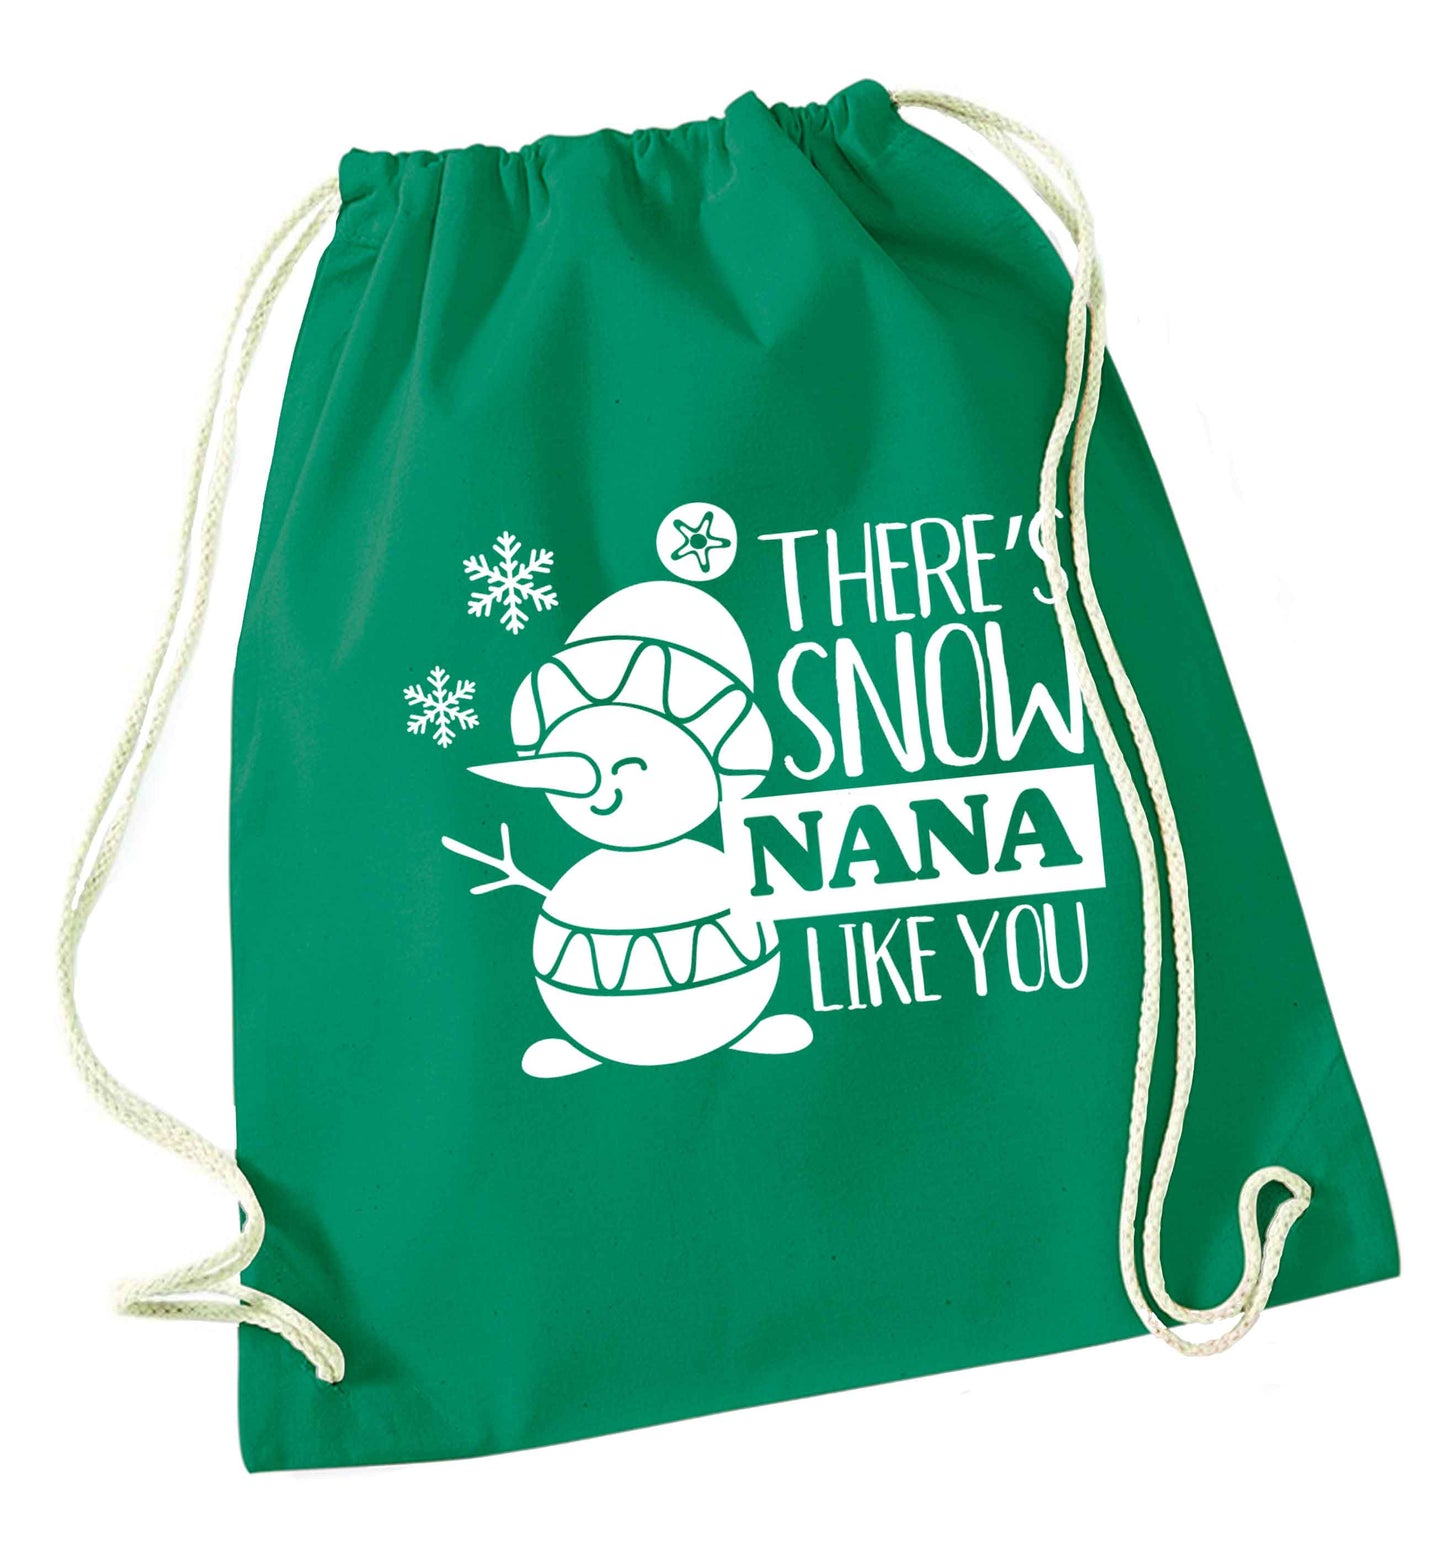 There's snow nana like you green drawstring bag